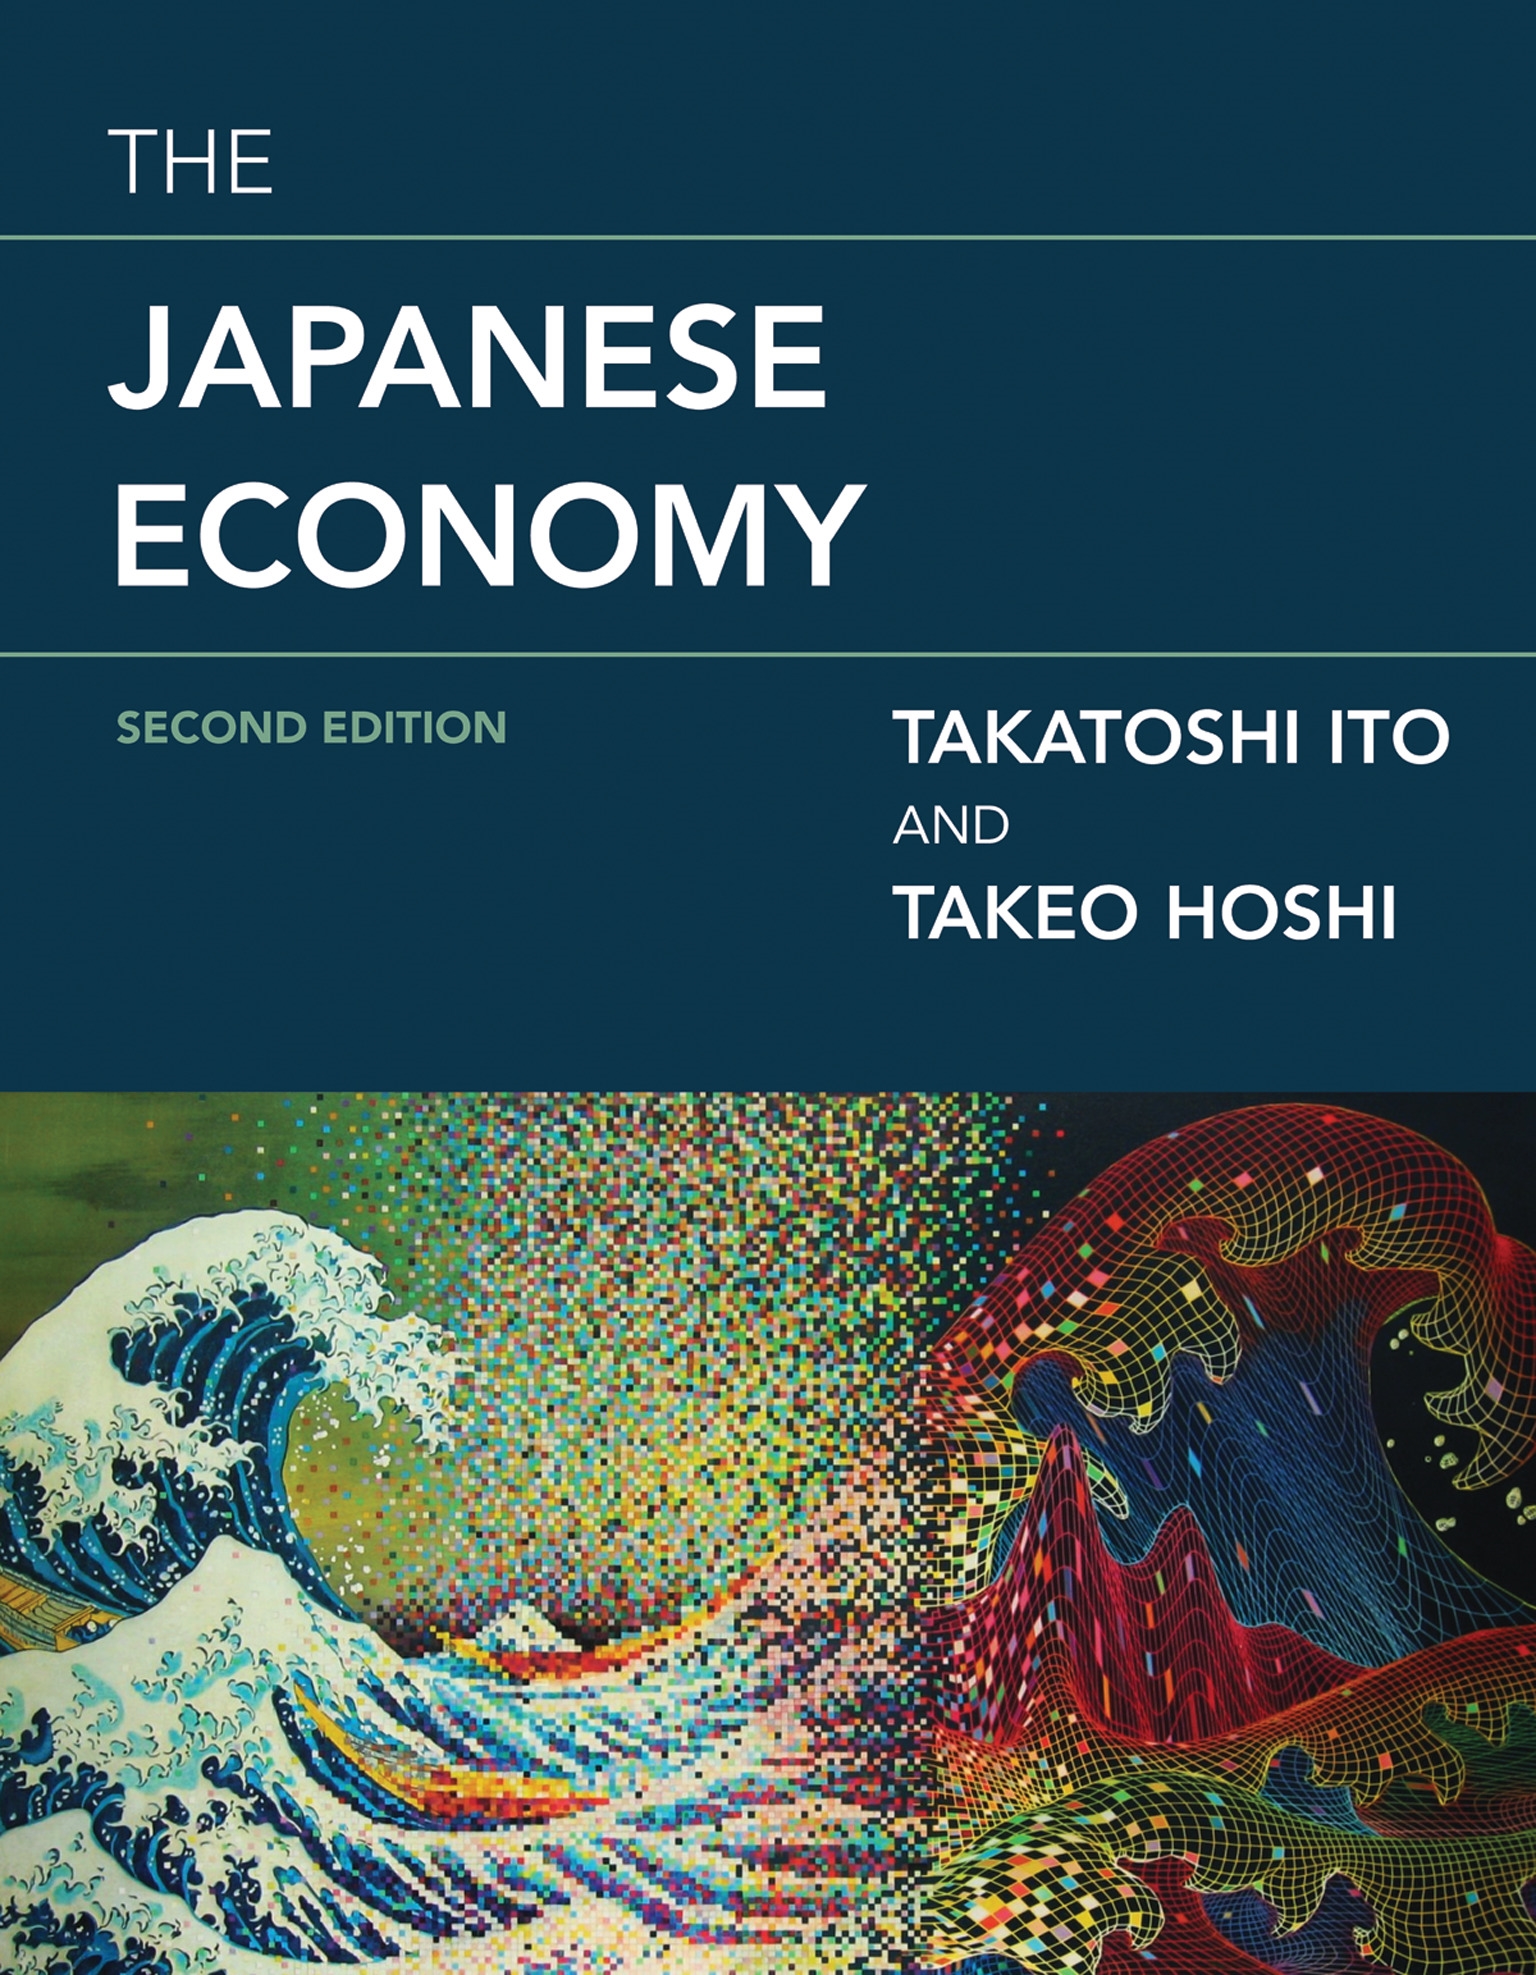 The Japanese Economy, second edition by Takatoshi Ito - Penguin 